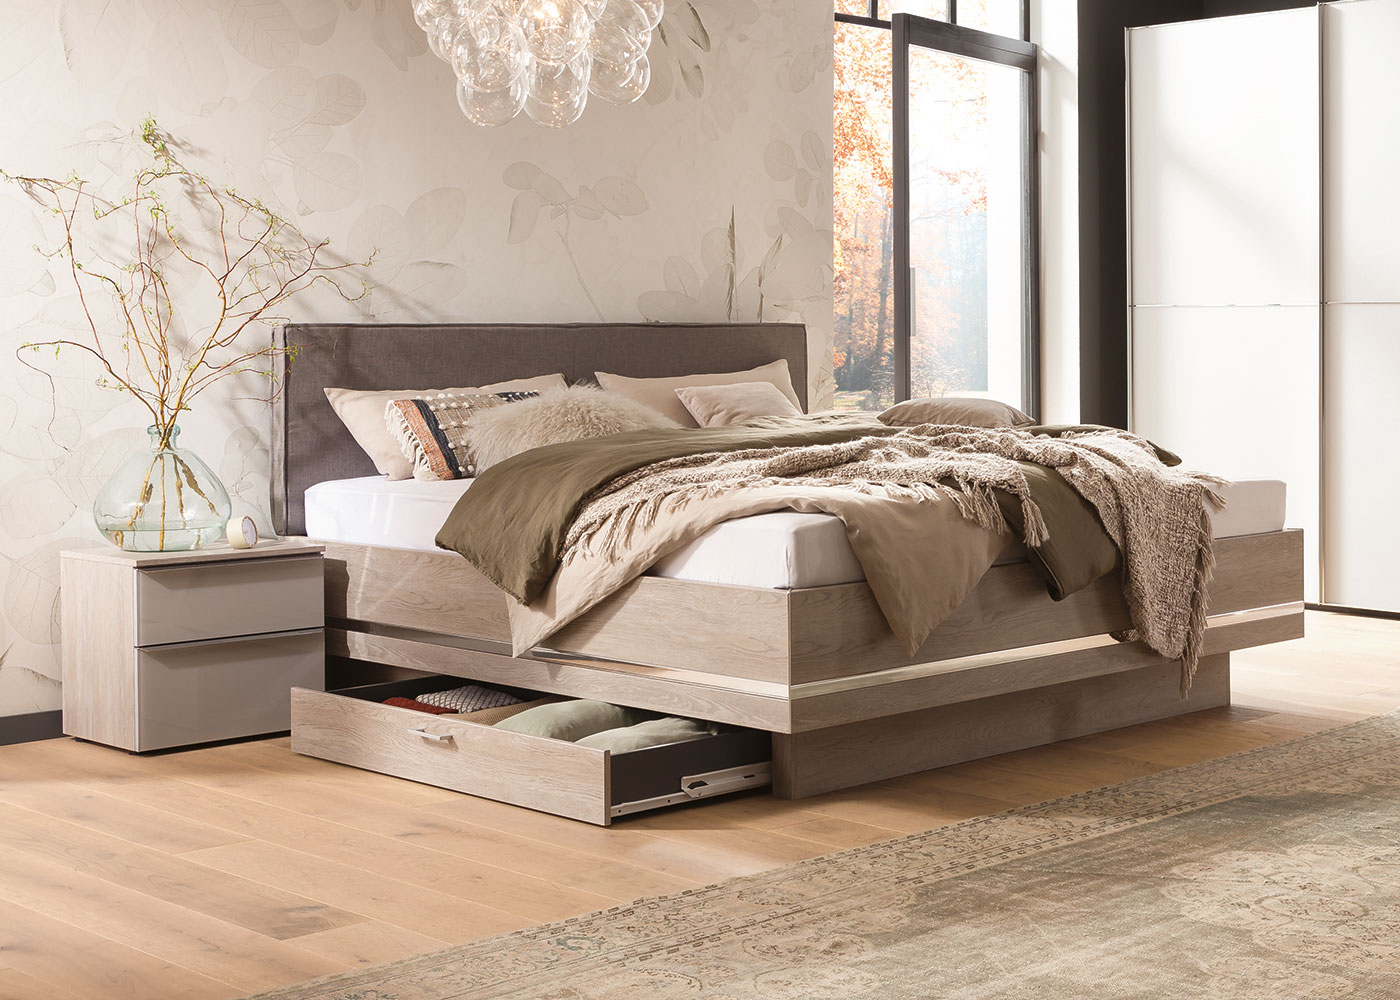 nolte express bedroom furniture